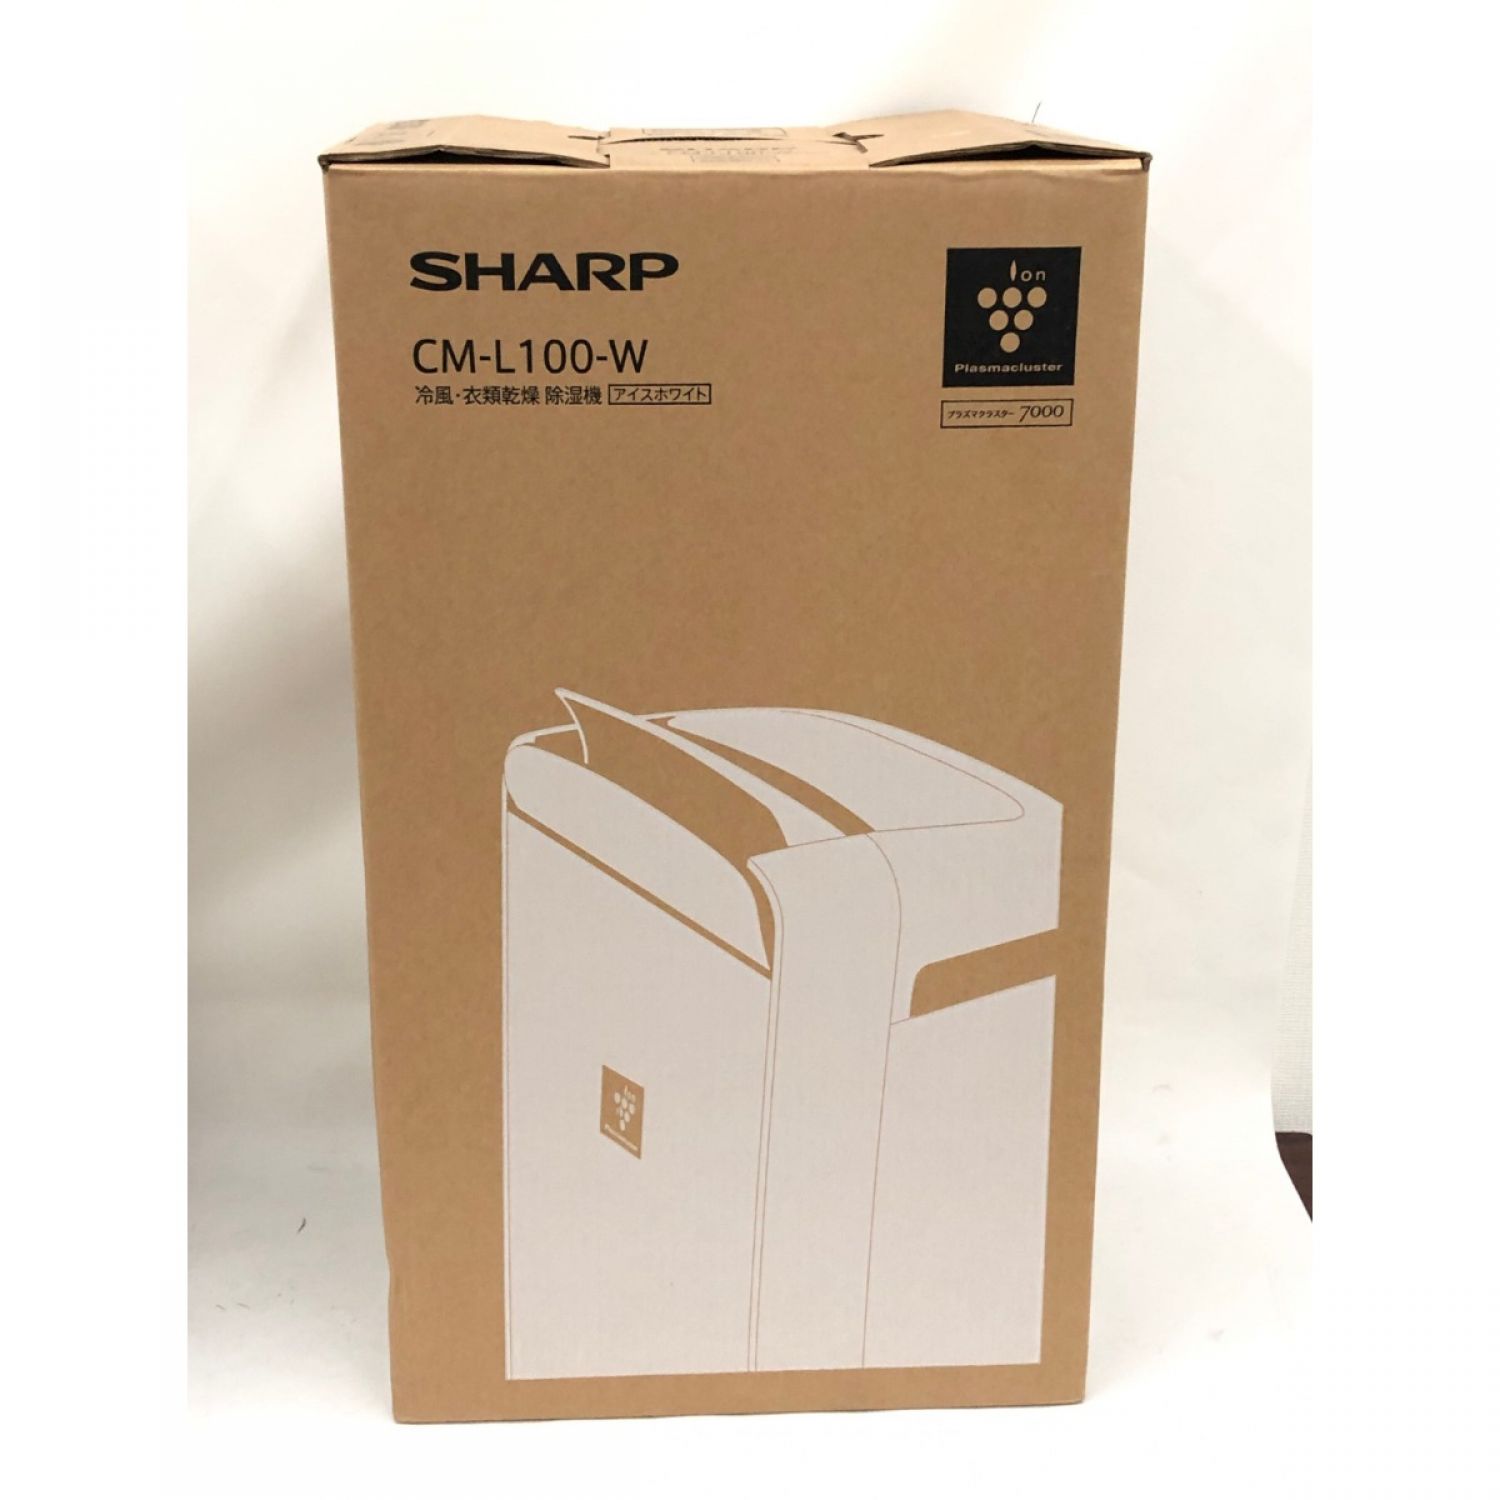 SHARP CM-L100-W 衣類乾燥除湿機 プラズマクラスター 2020年製電源コード長さ22m